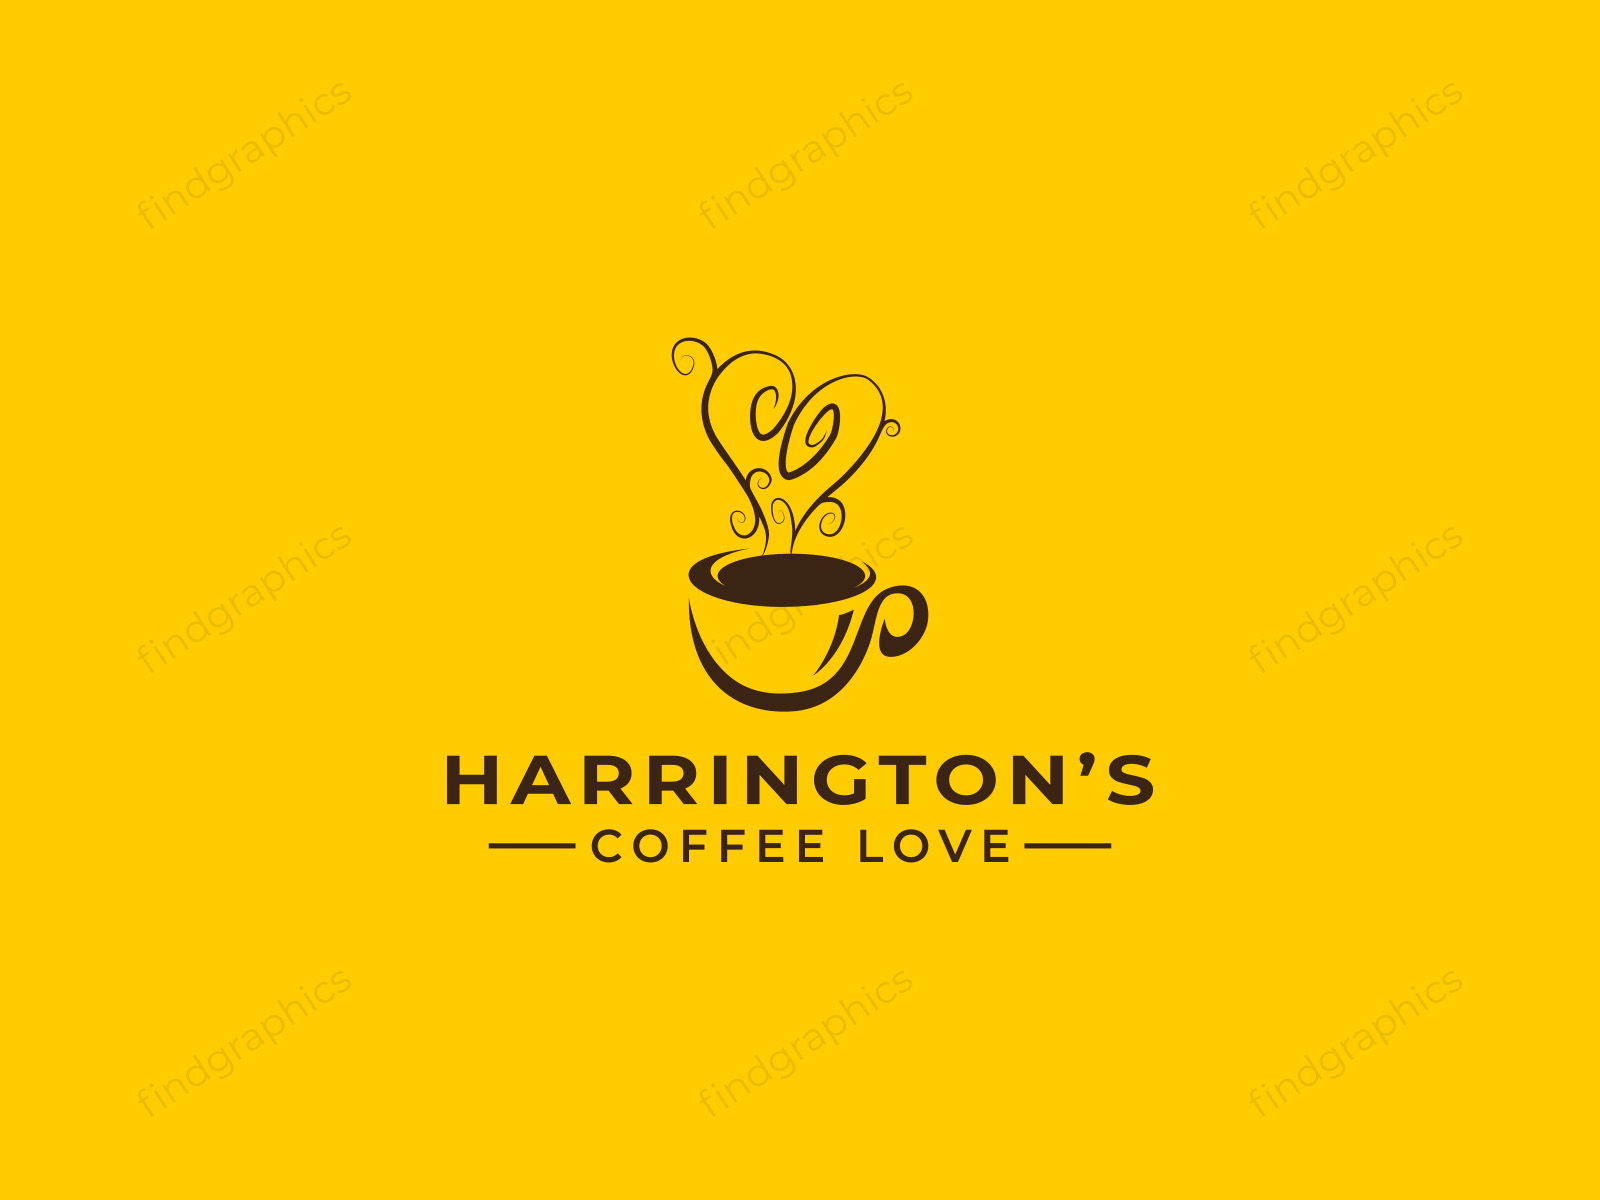 coffee shop logo design - restaurant logo design - cafe logo by MD ...